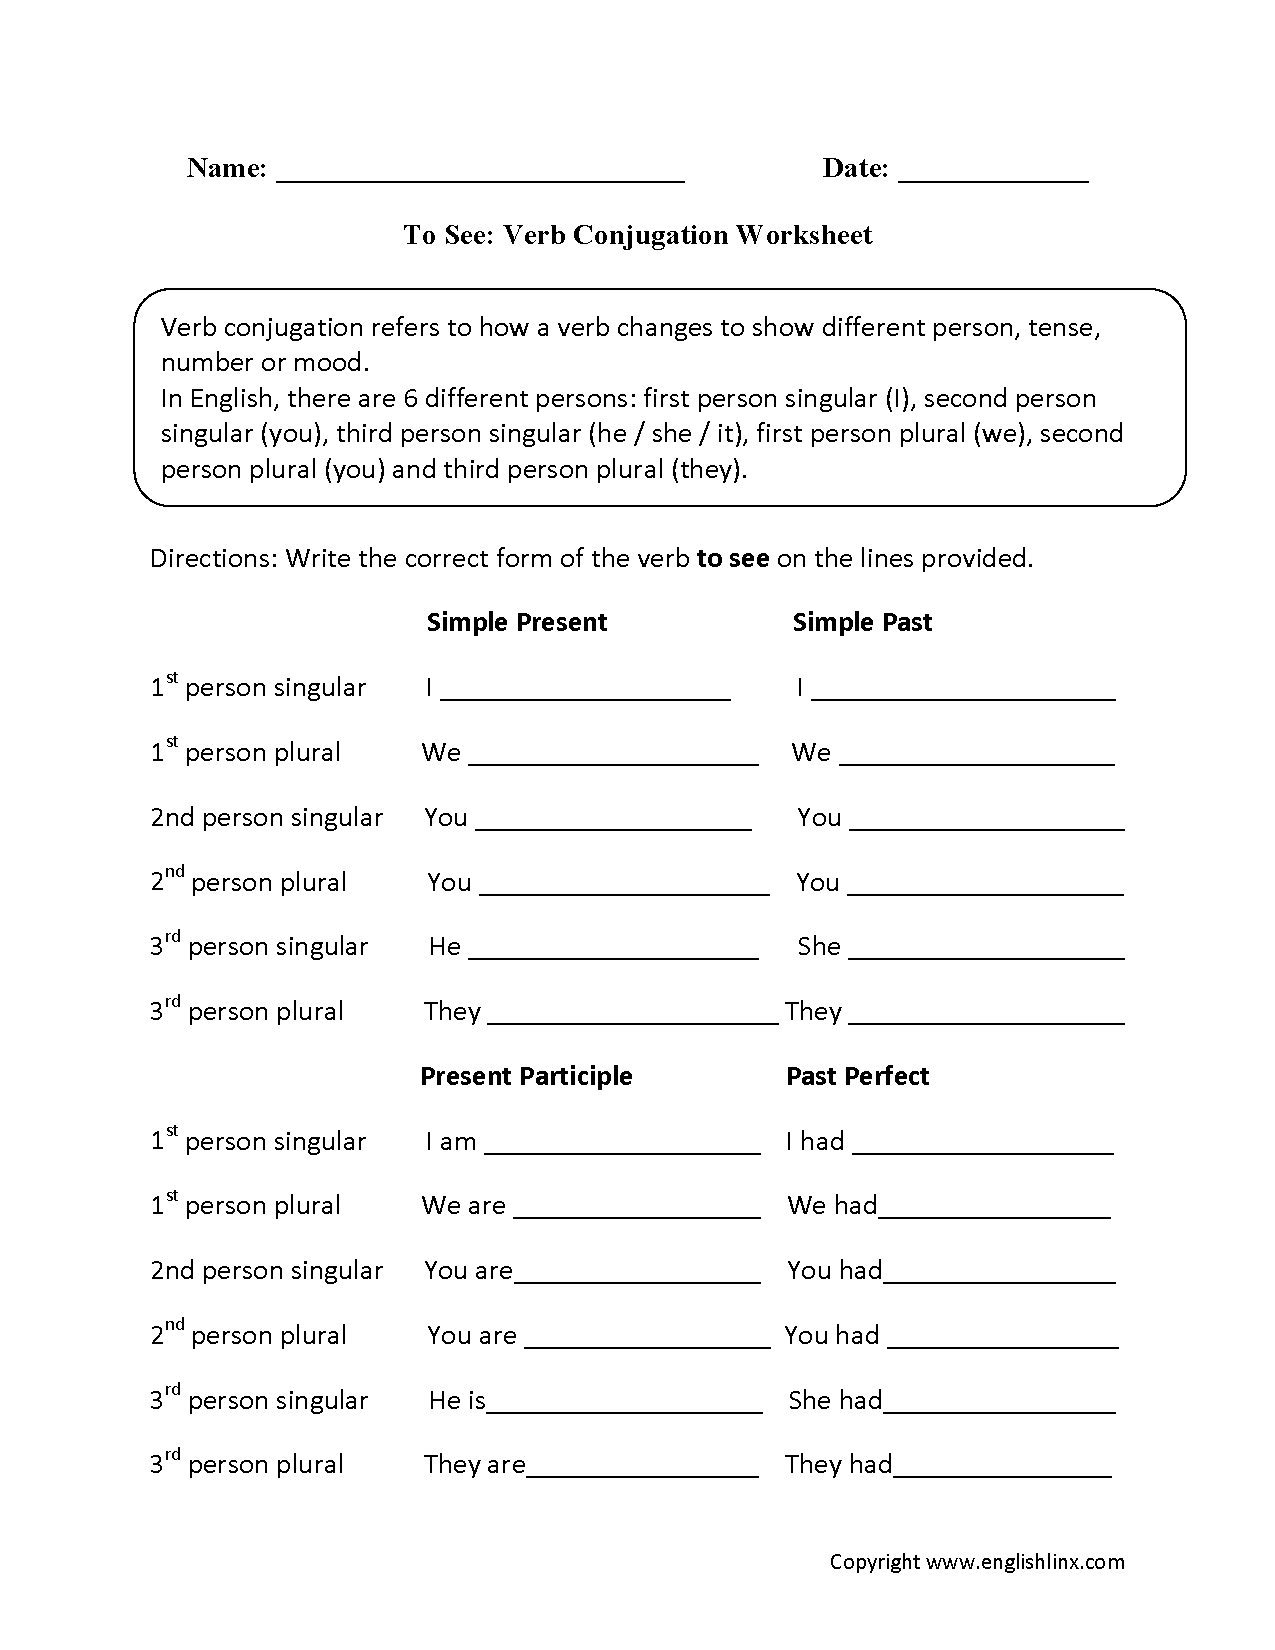 To See Verb Conjugation Worksheets